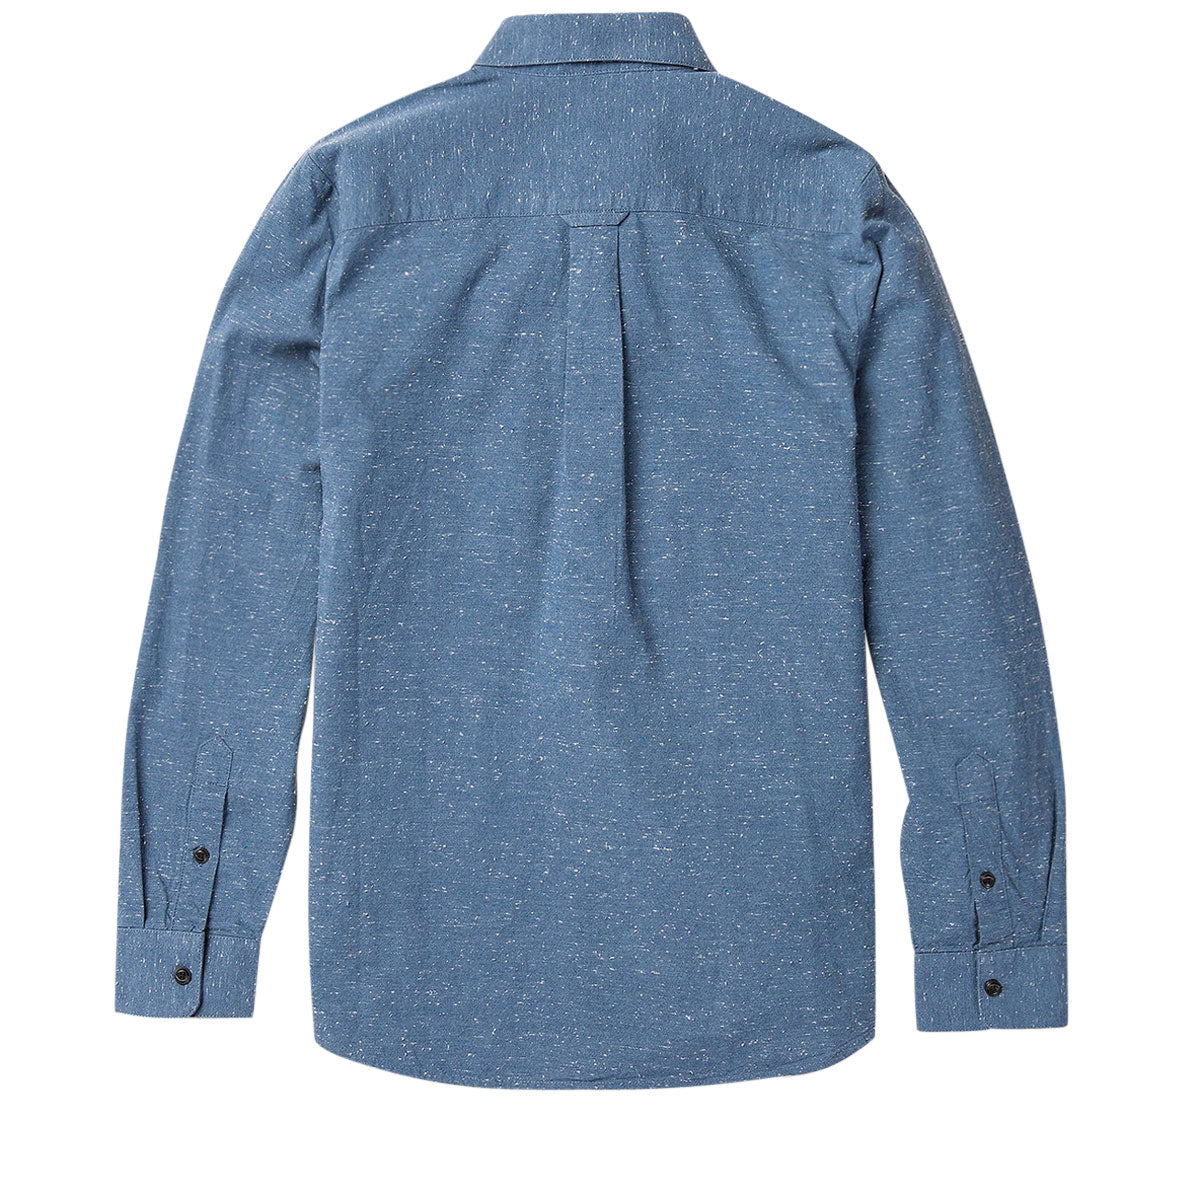 Volcom Date Knight Long Sleeve Shirt - Stone Blue image 2